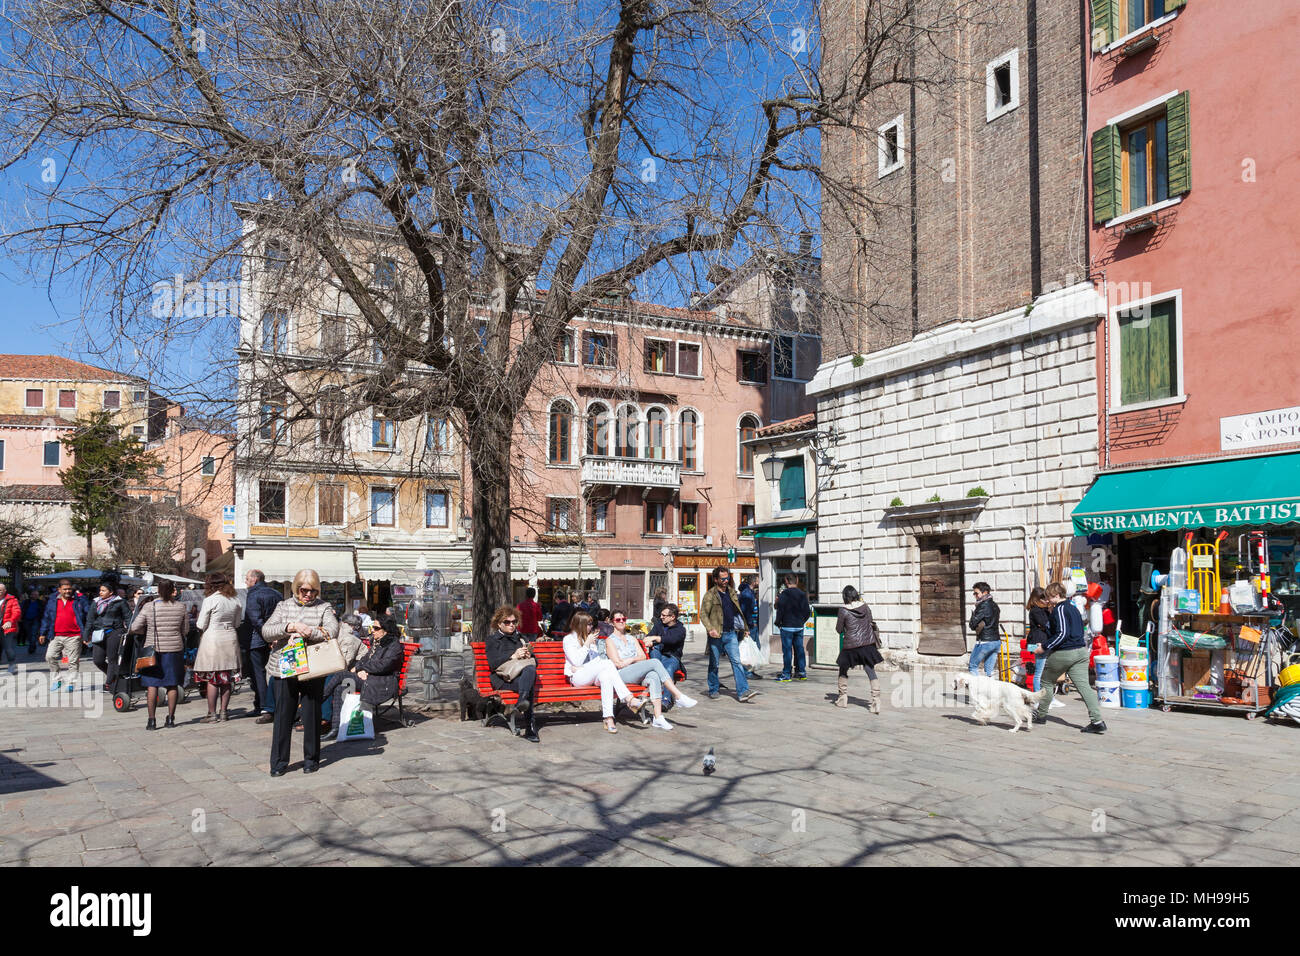 Local Venetians enjoying the spring sunshine Campo Santi Apostoli, Cannaregio, Venice, italy sitting on benches, shopping and walking a dog Stock Photo